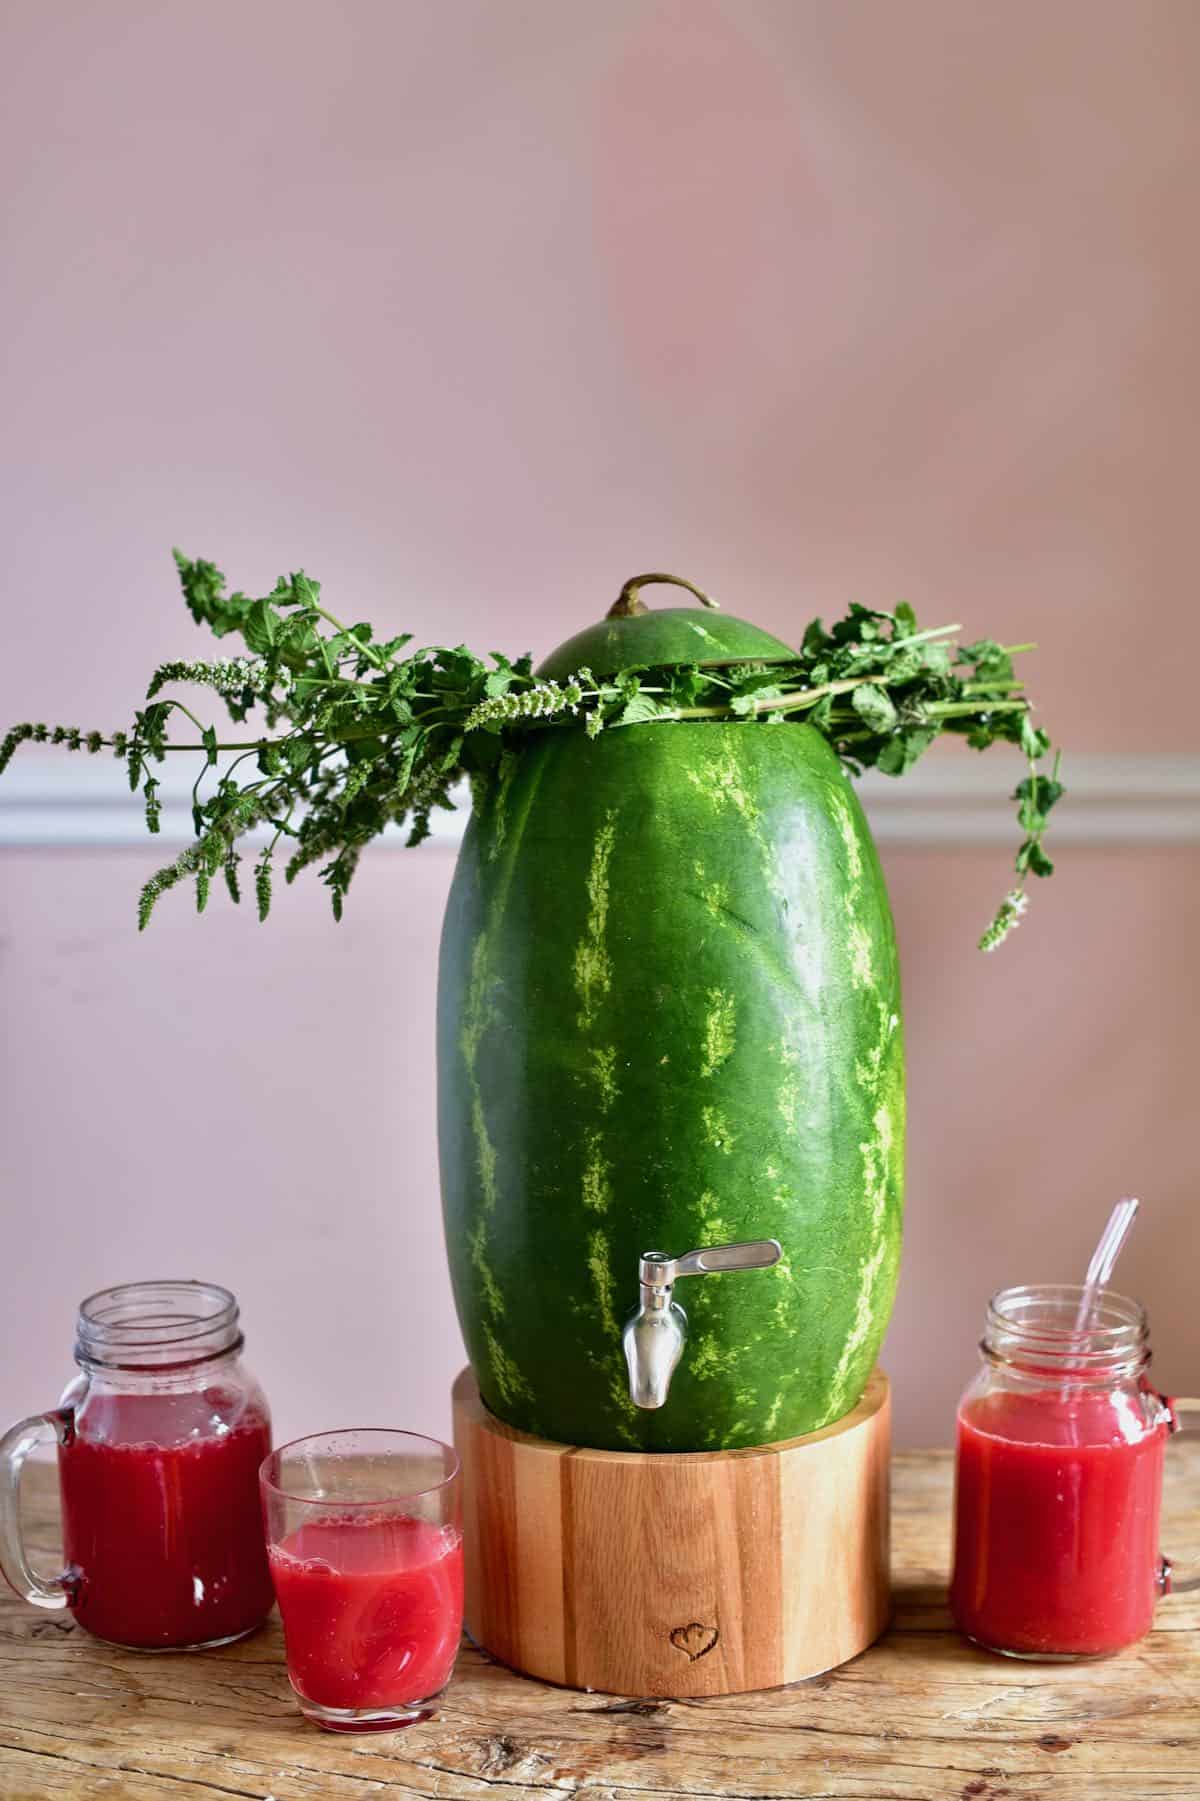 Watermelon juice in glasses and watermelon keg